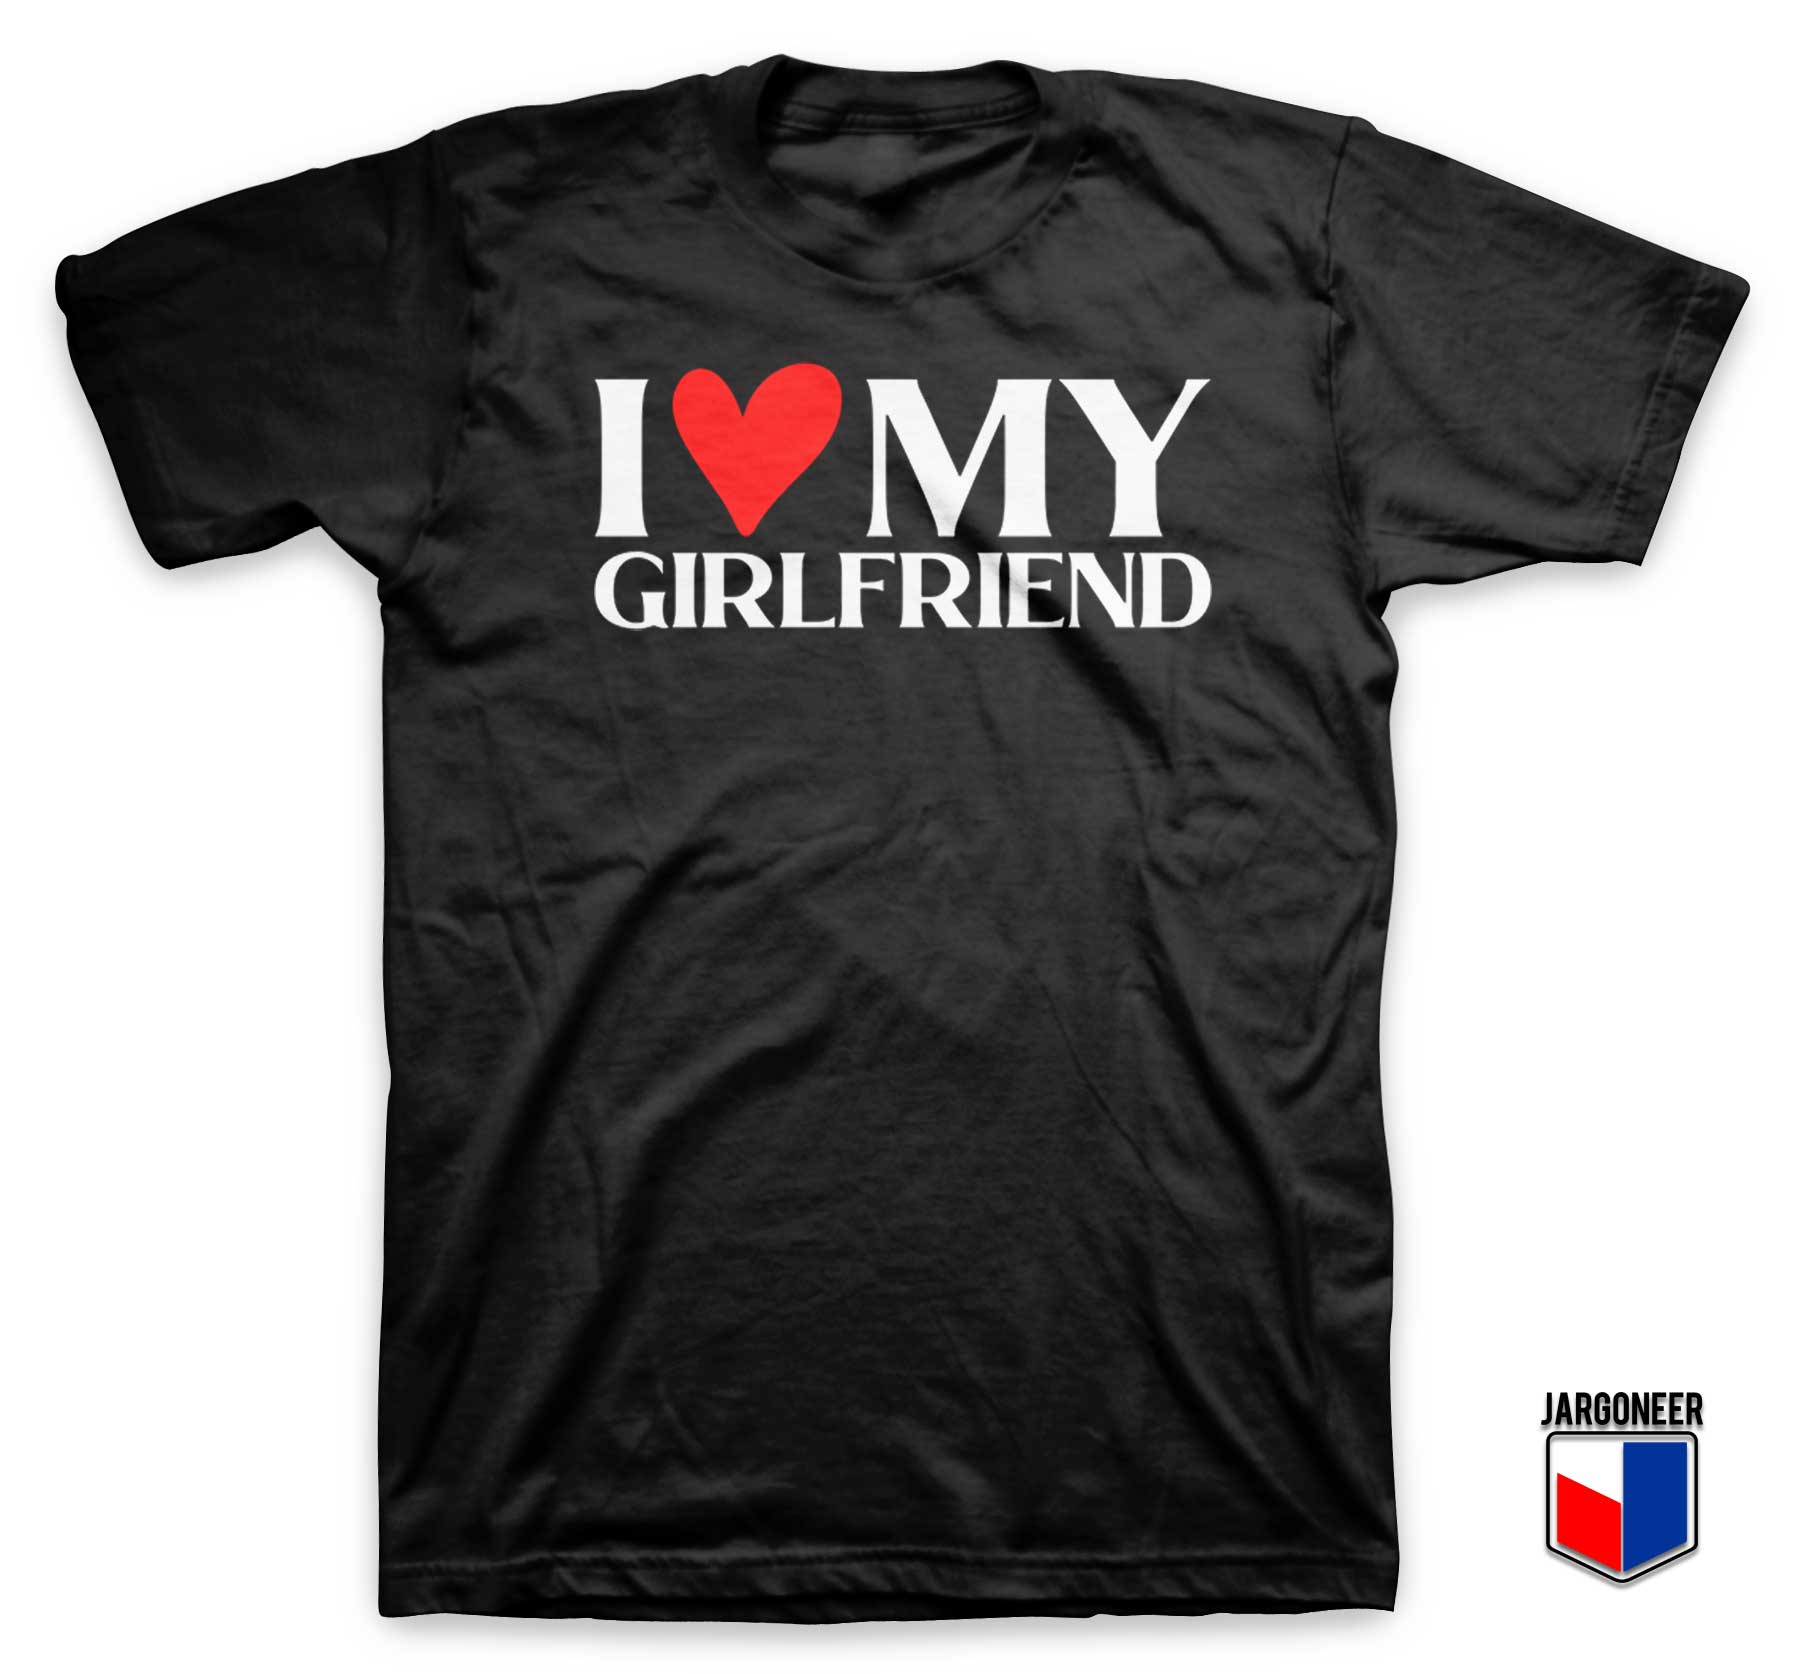 I Love My Girlfriend T Shirt - Shop Unique Graphic Cool Shirt Designs